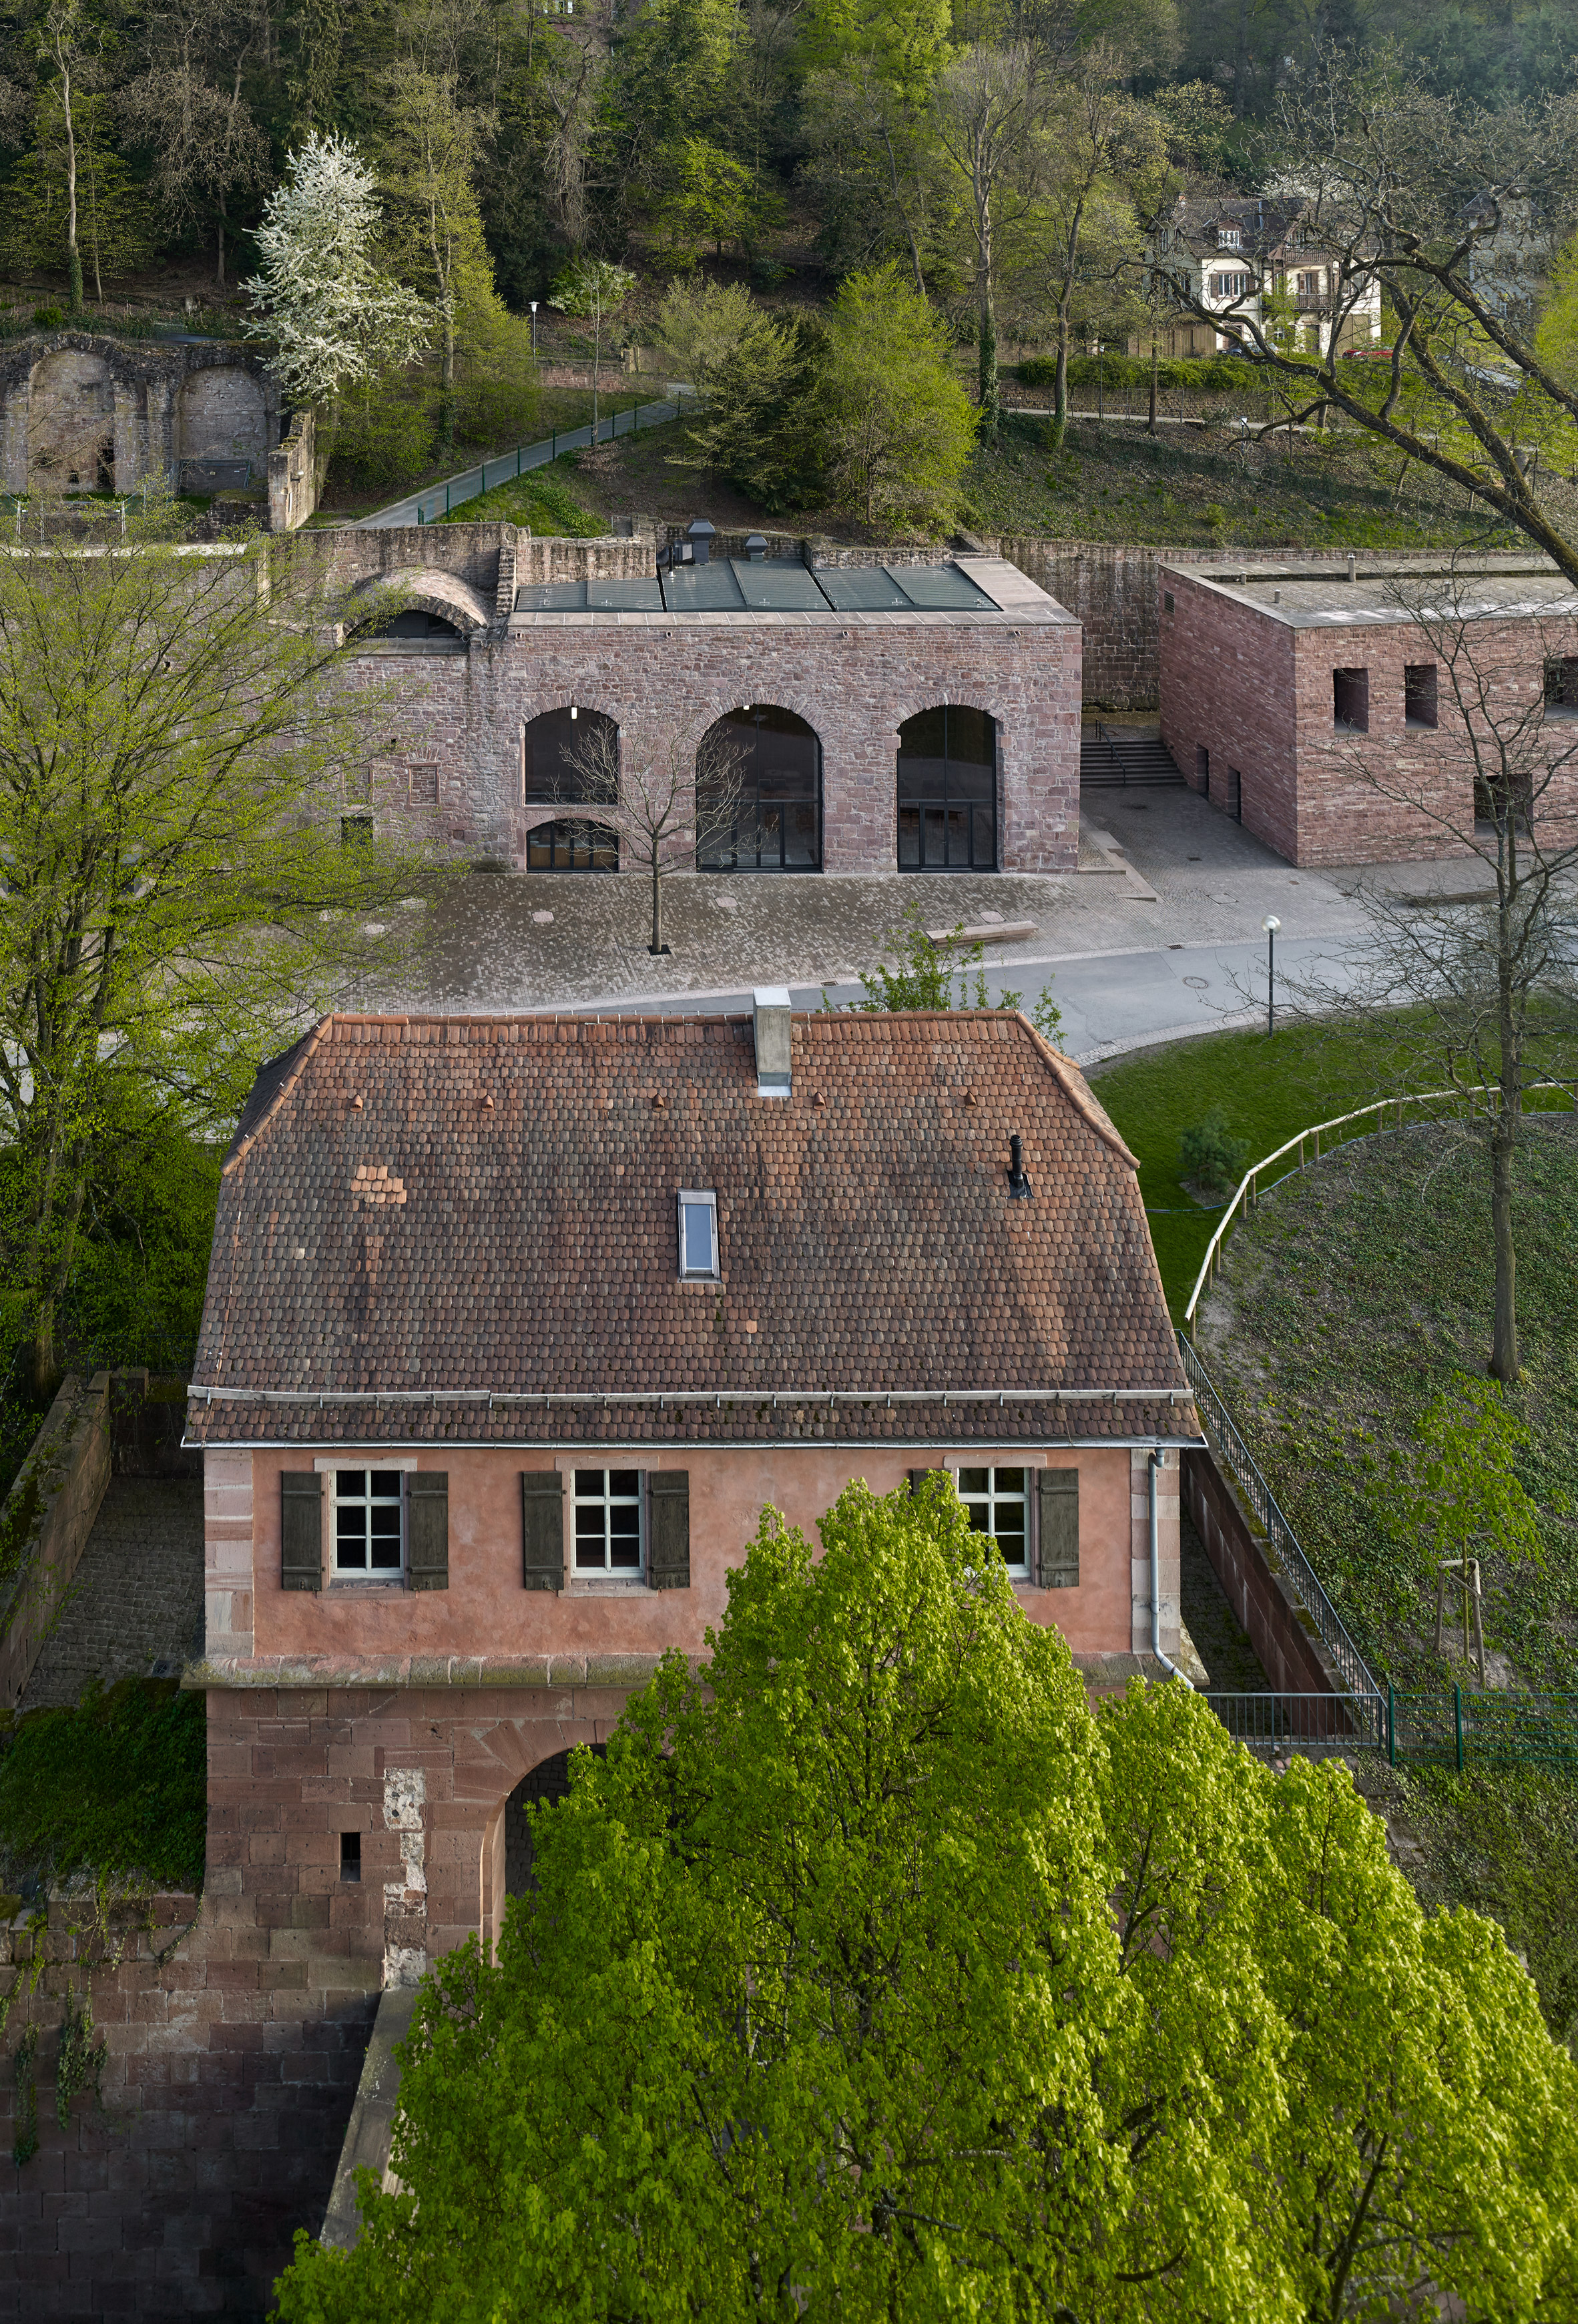 Heidelberg Castle restoration by Max Dudler